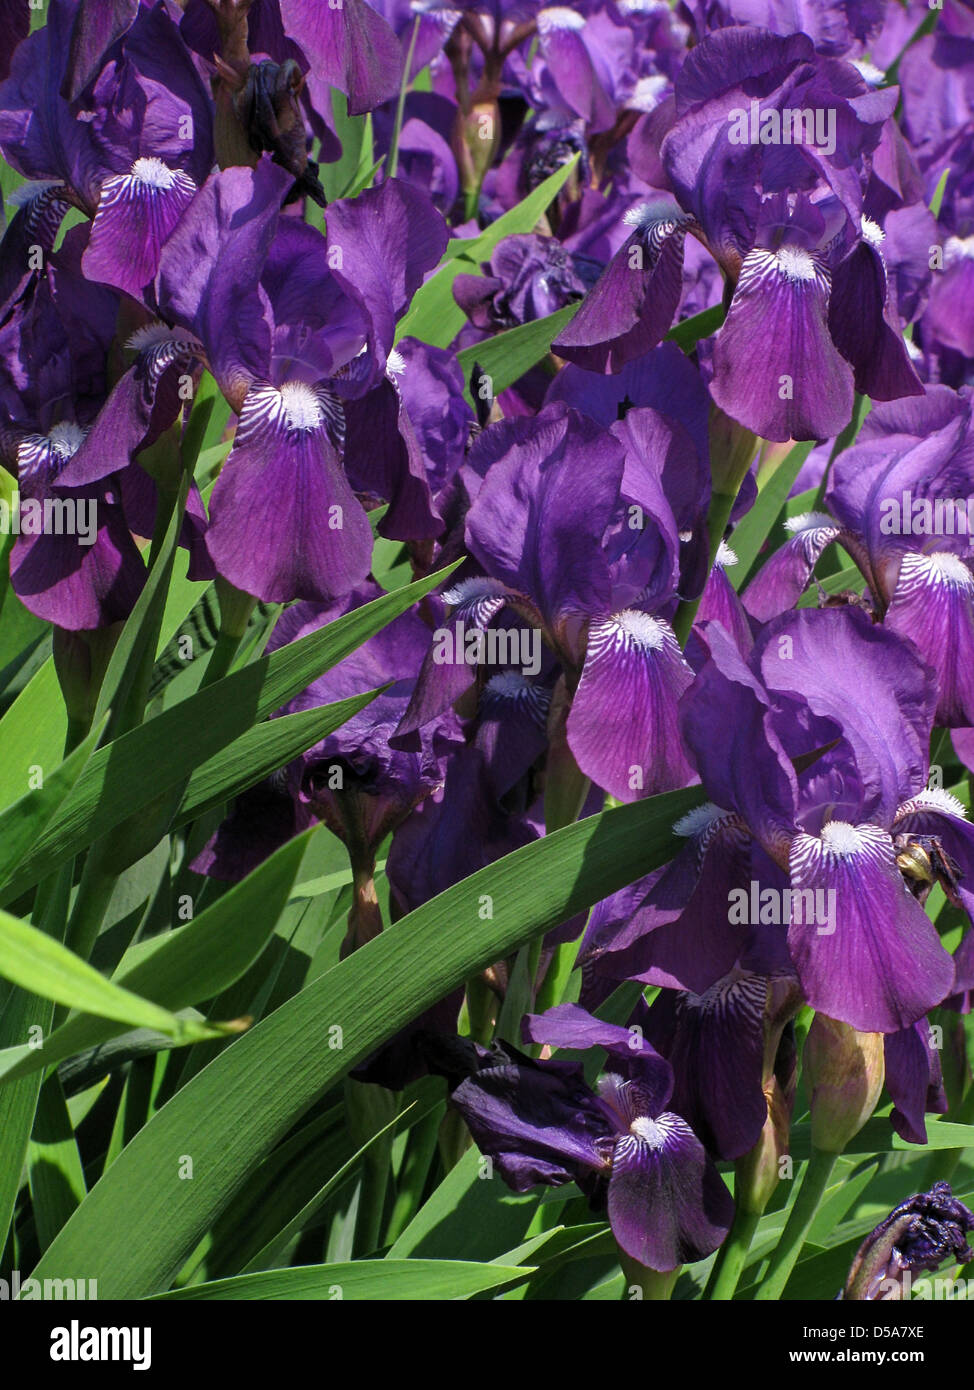 iris flowers Stock Photo